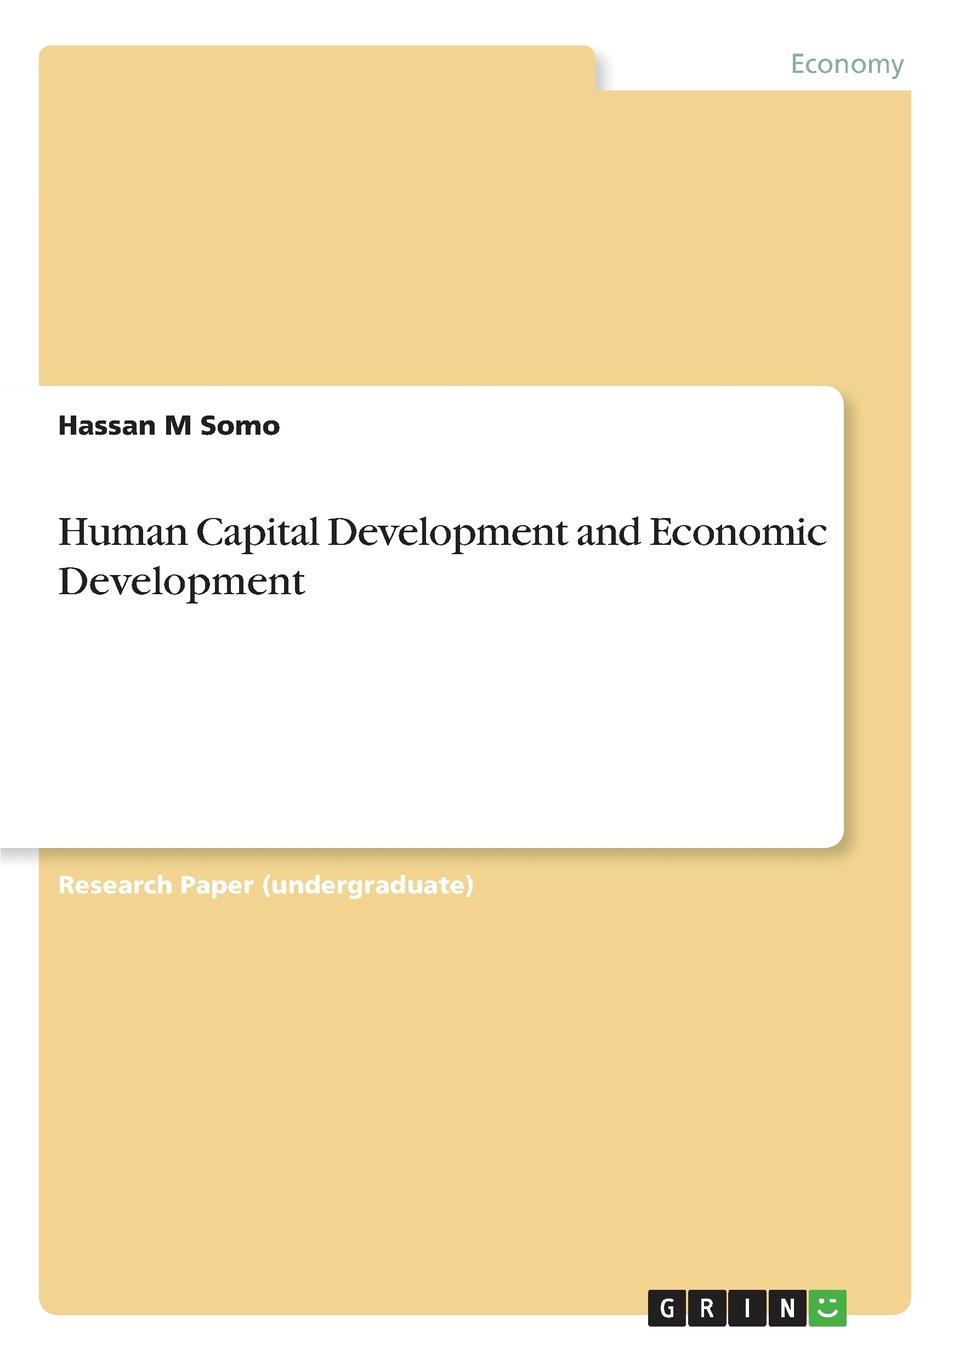 Human Capital Development and Economic Development